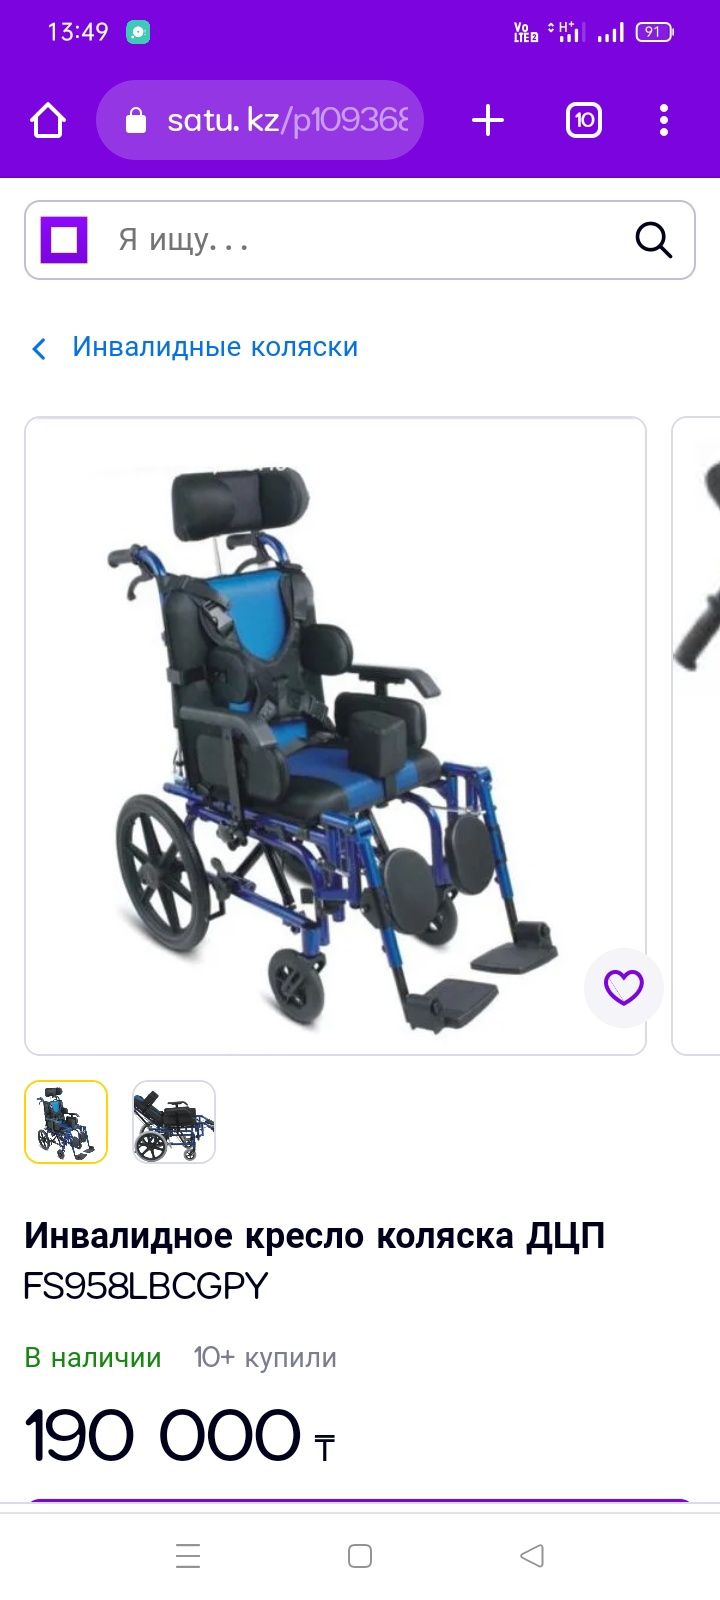 Инвалидное кресло коляска ДЦП FS958LBCGPY